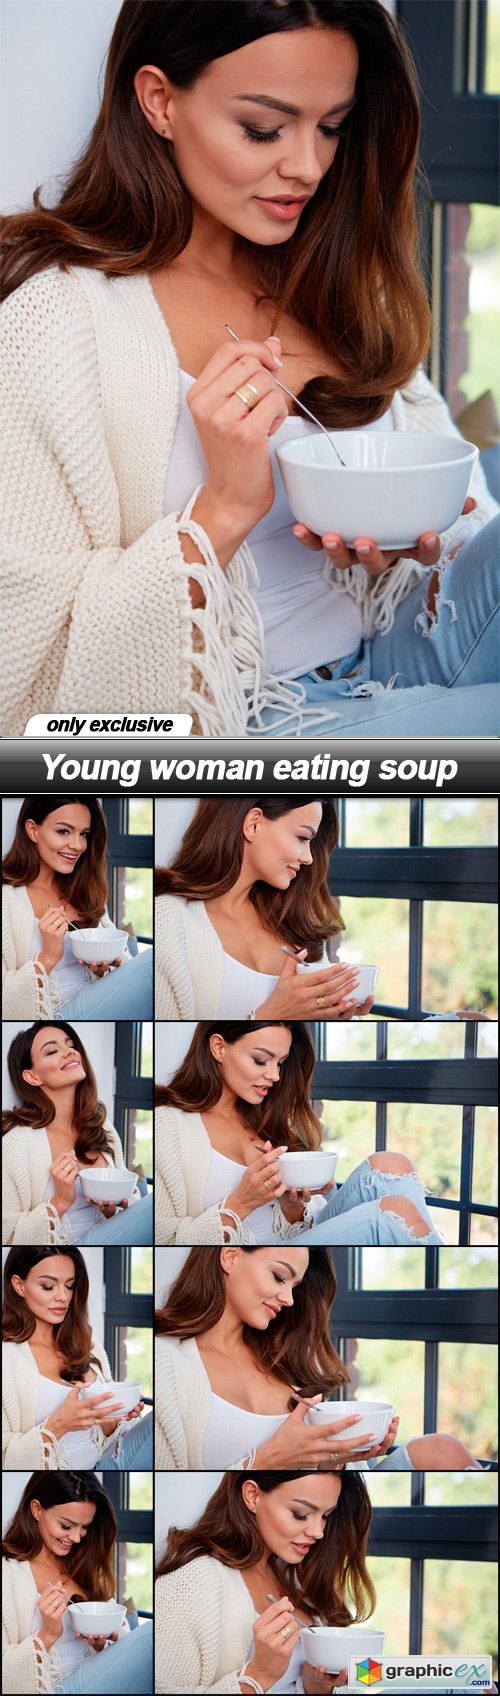 Young woman eating soup - 9 UHQ JPEG